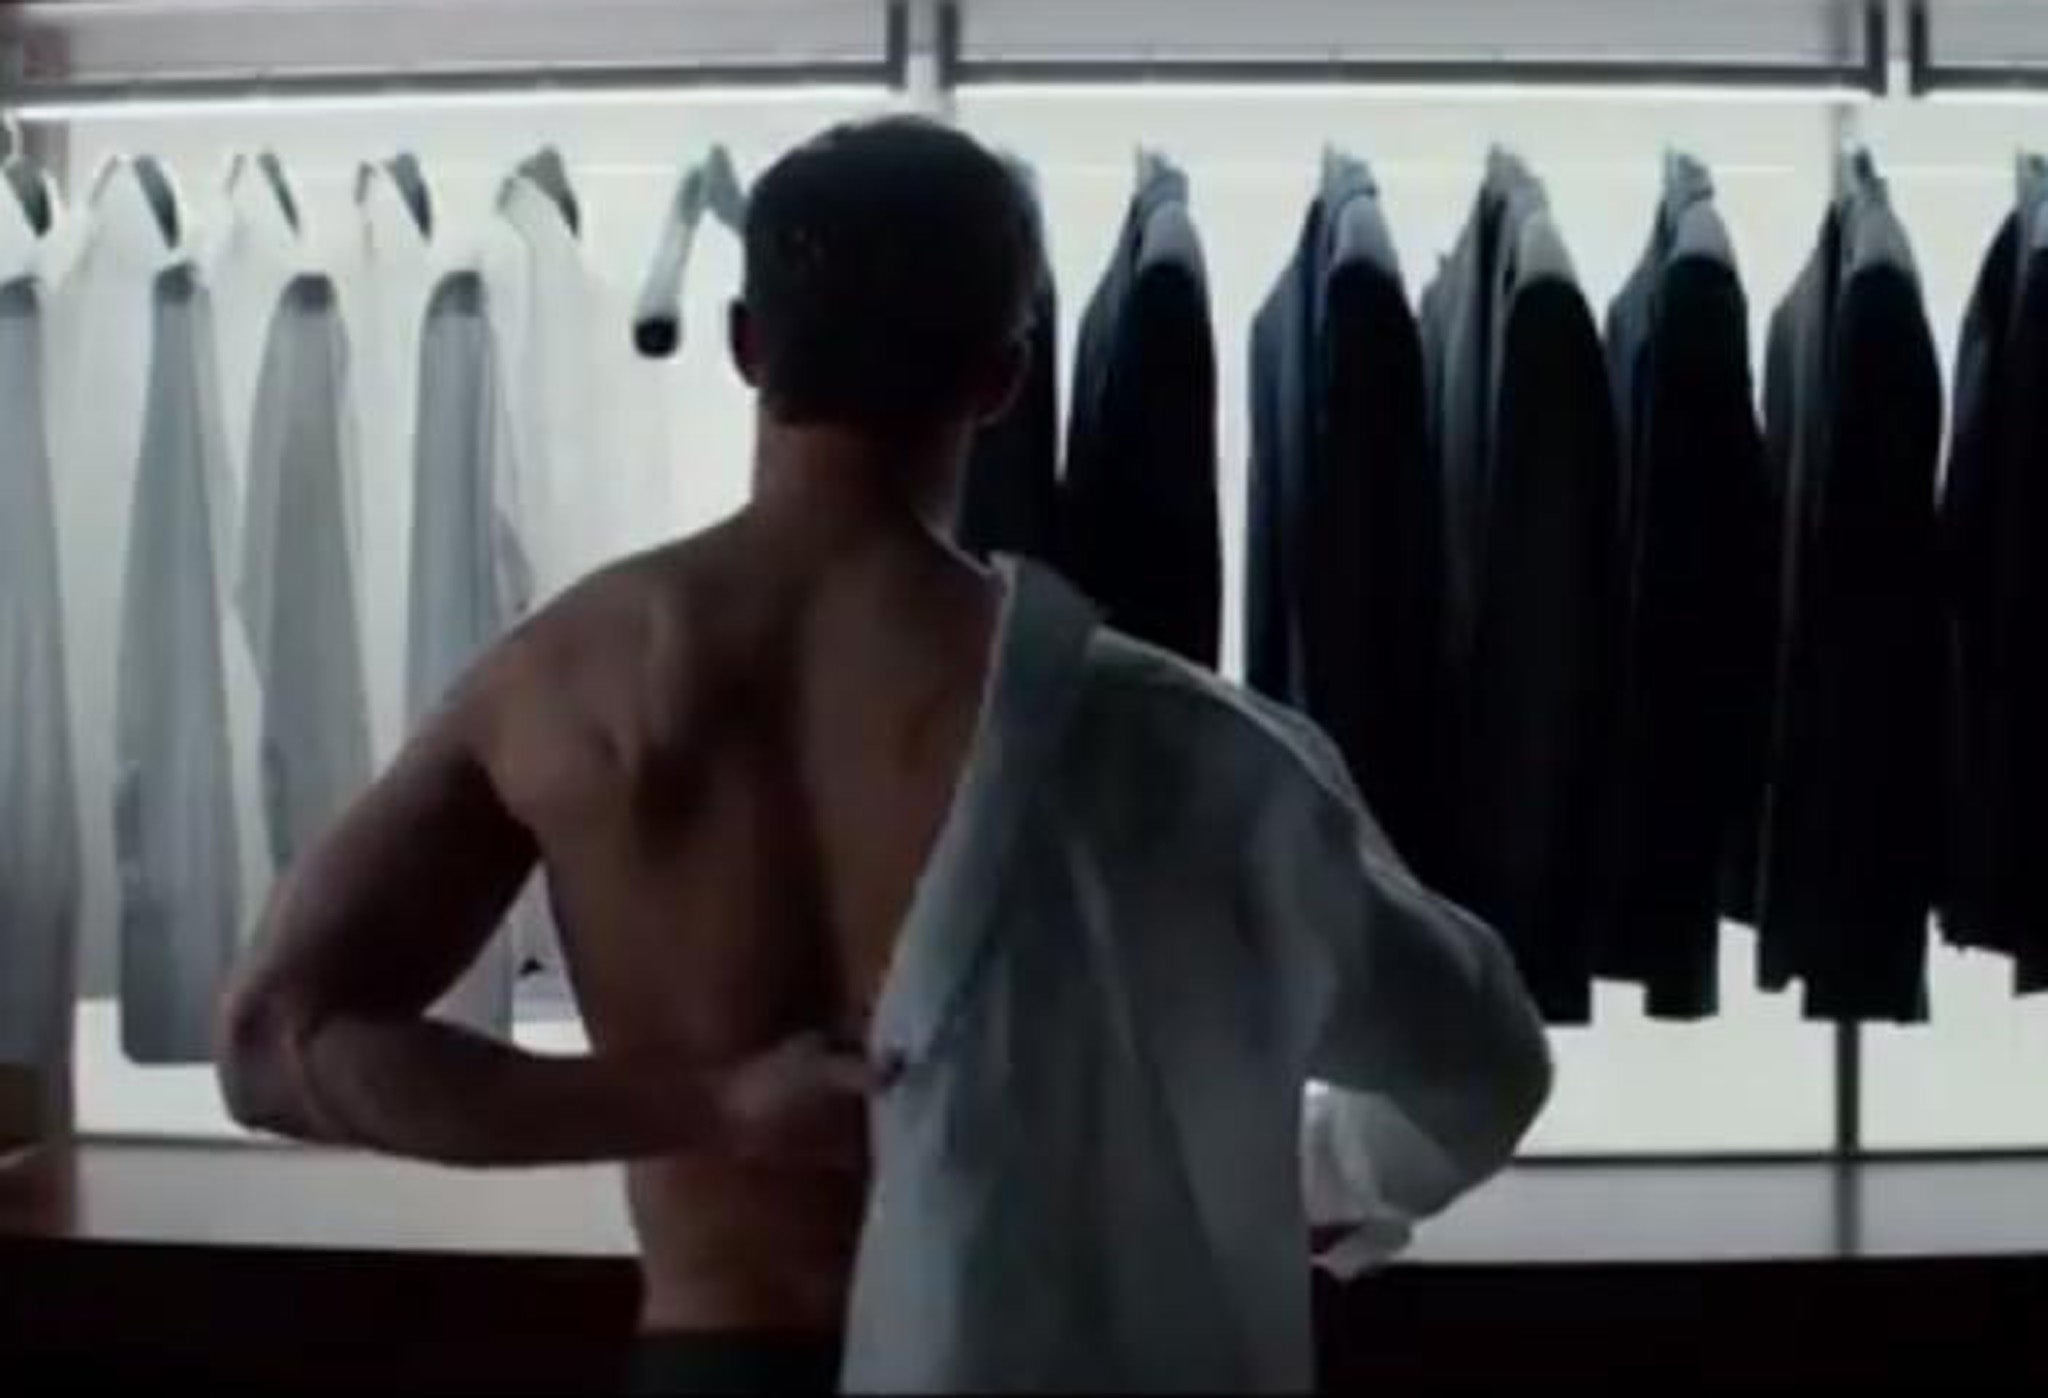 Jamie Dornan plays Christian Grey getting ready for work